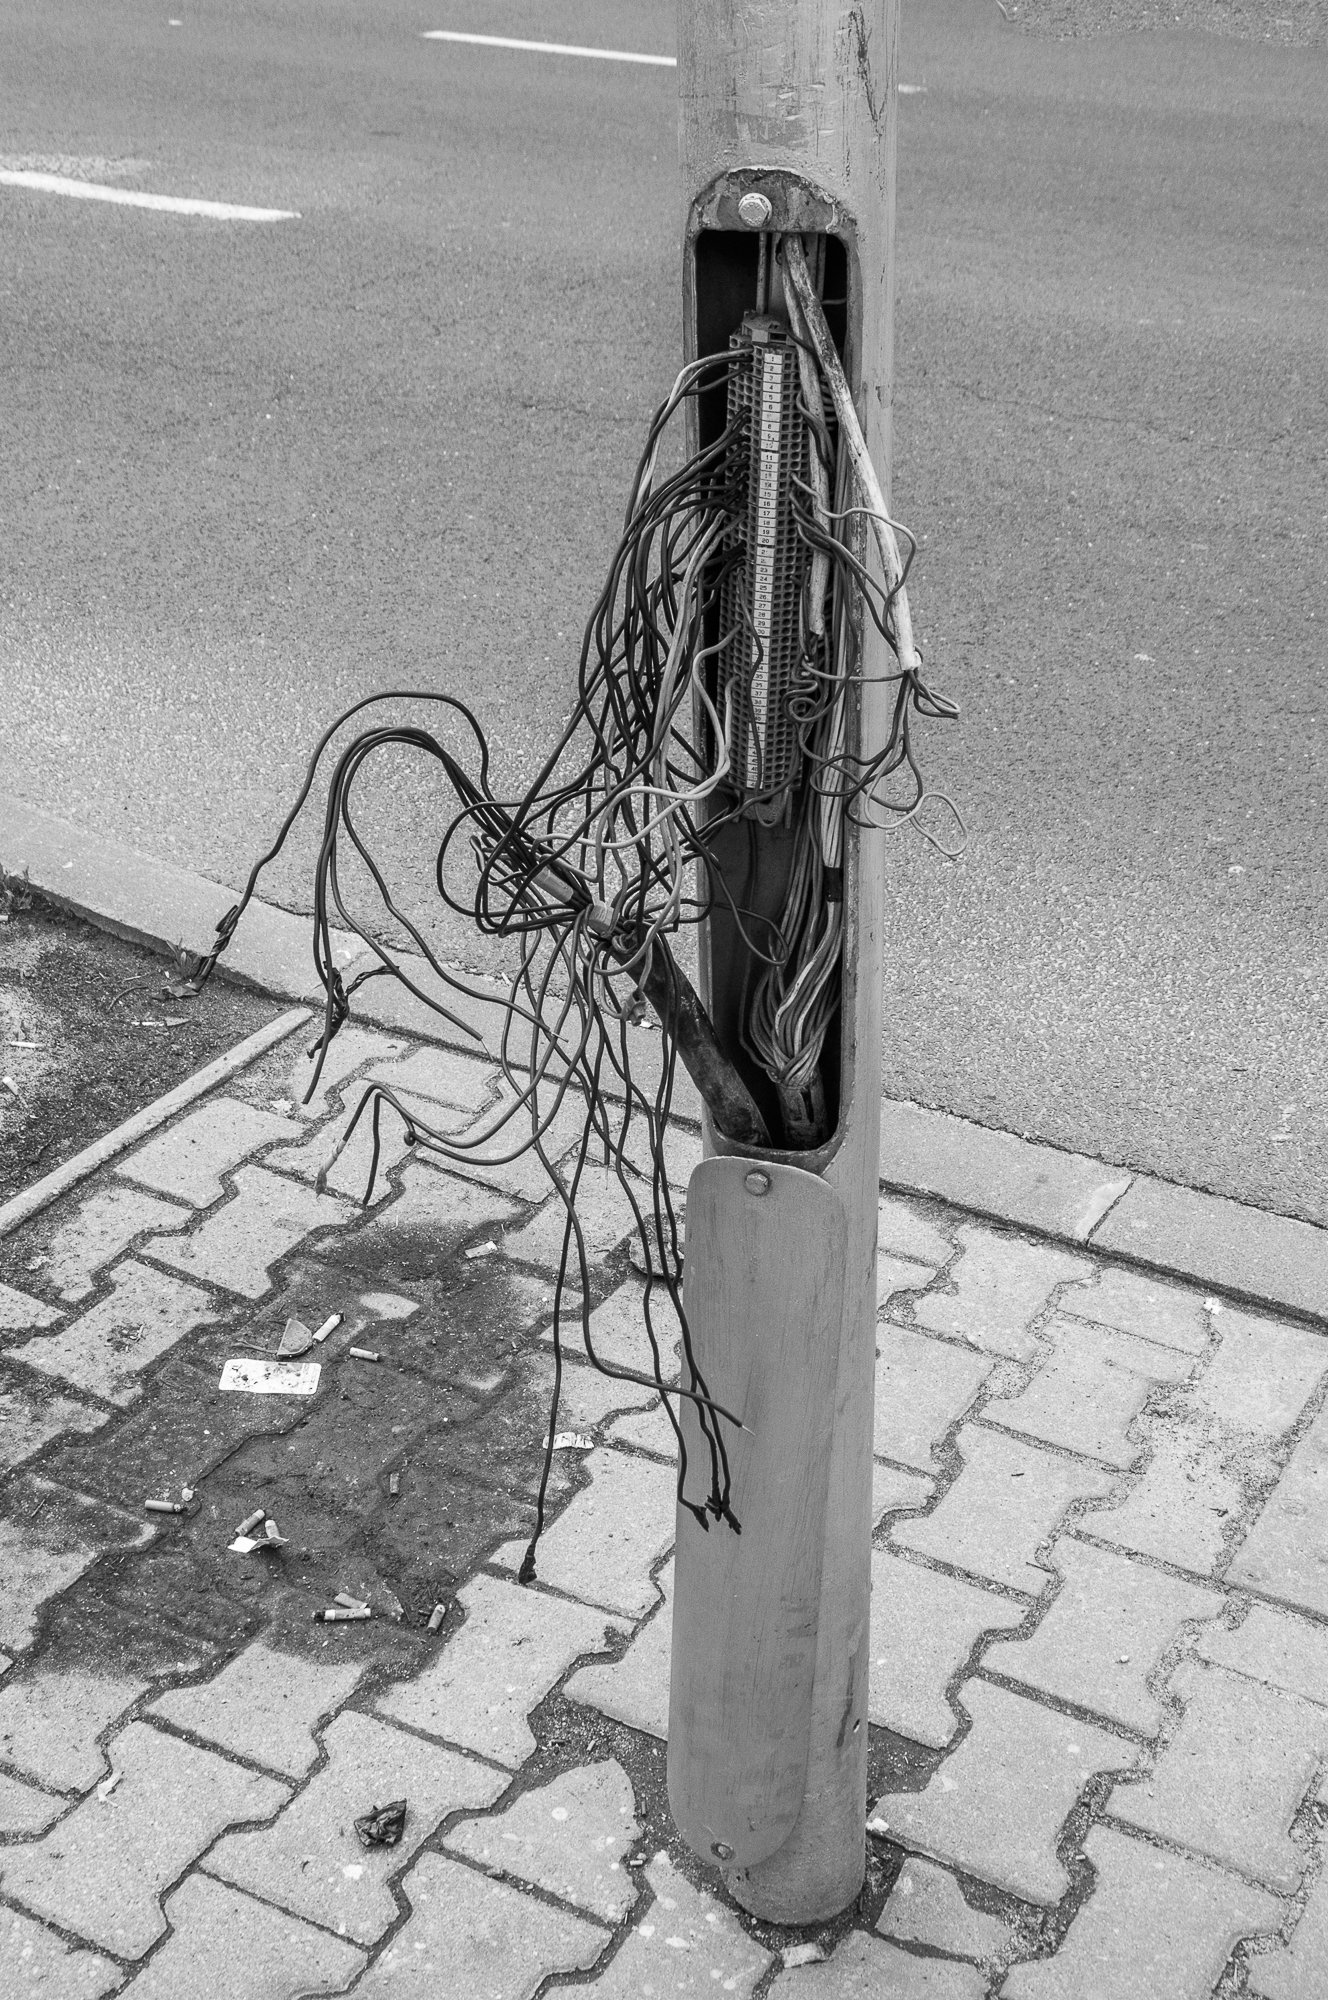 Adam Mazek Photography Warsaw (Warszawa) 2019. Post: "Nothing last forever." Minimalism. Damaged street lamp.